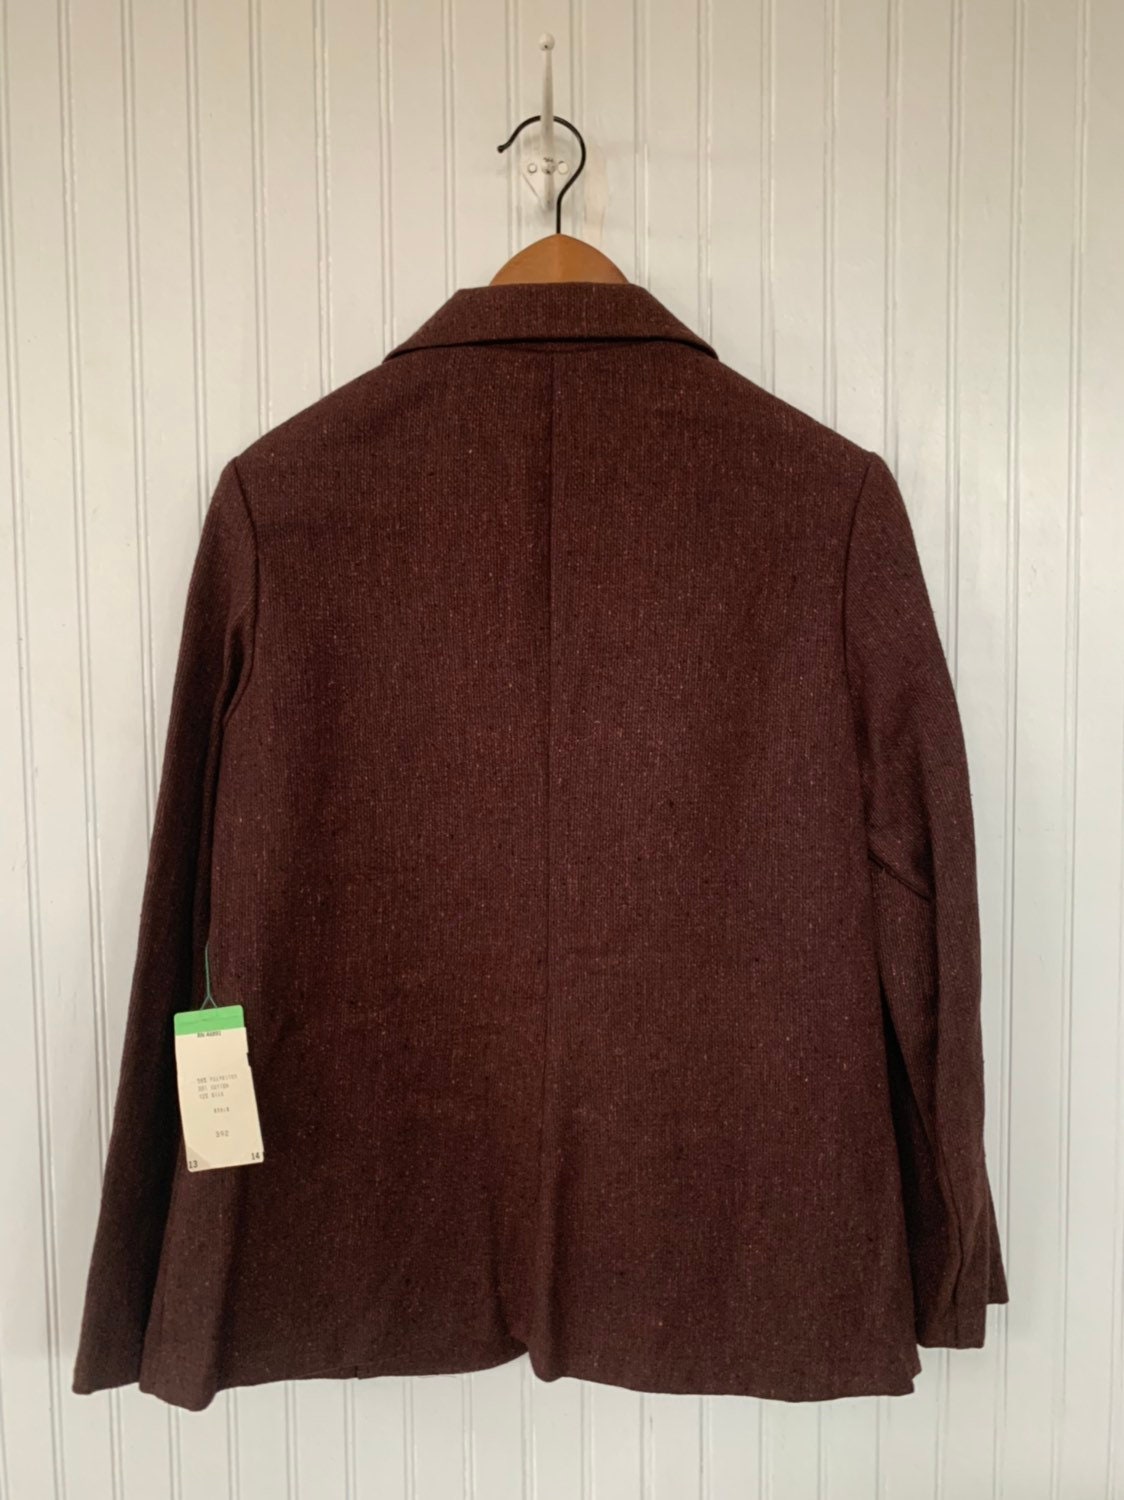 NWT Deadstock Vintage 80s Brown Blazer Tweed Jacket Pockets Medium Med ...